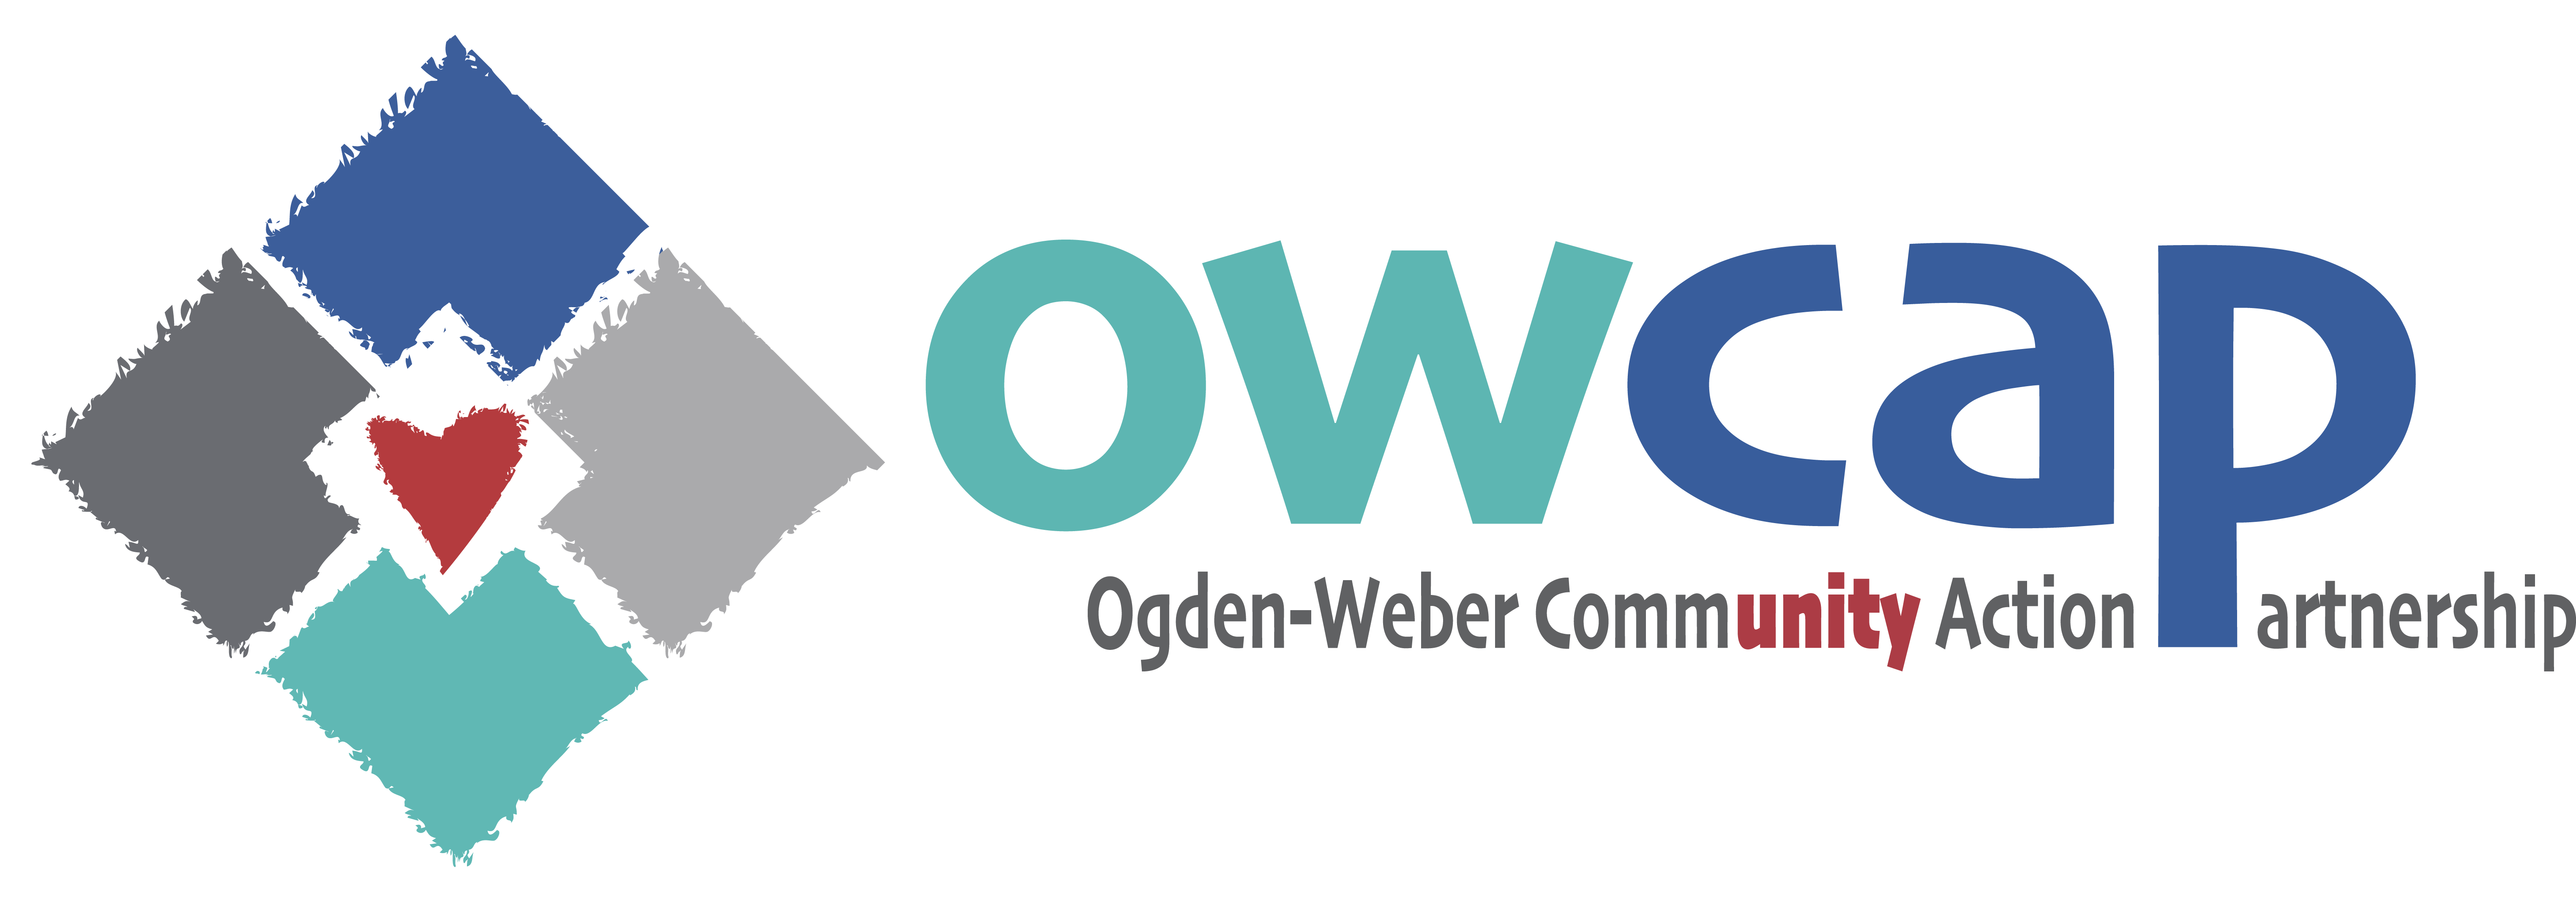 OWCAP's Logo